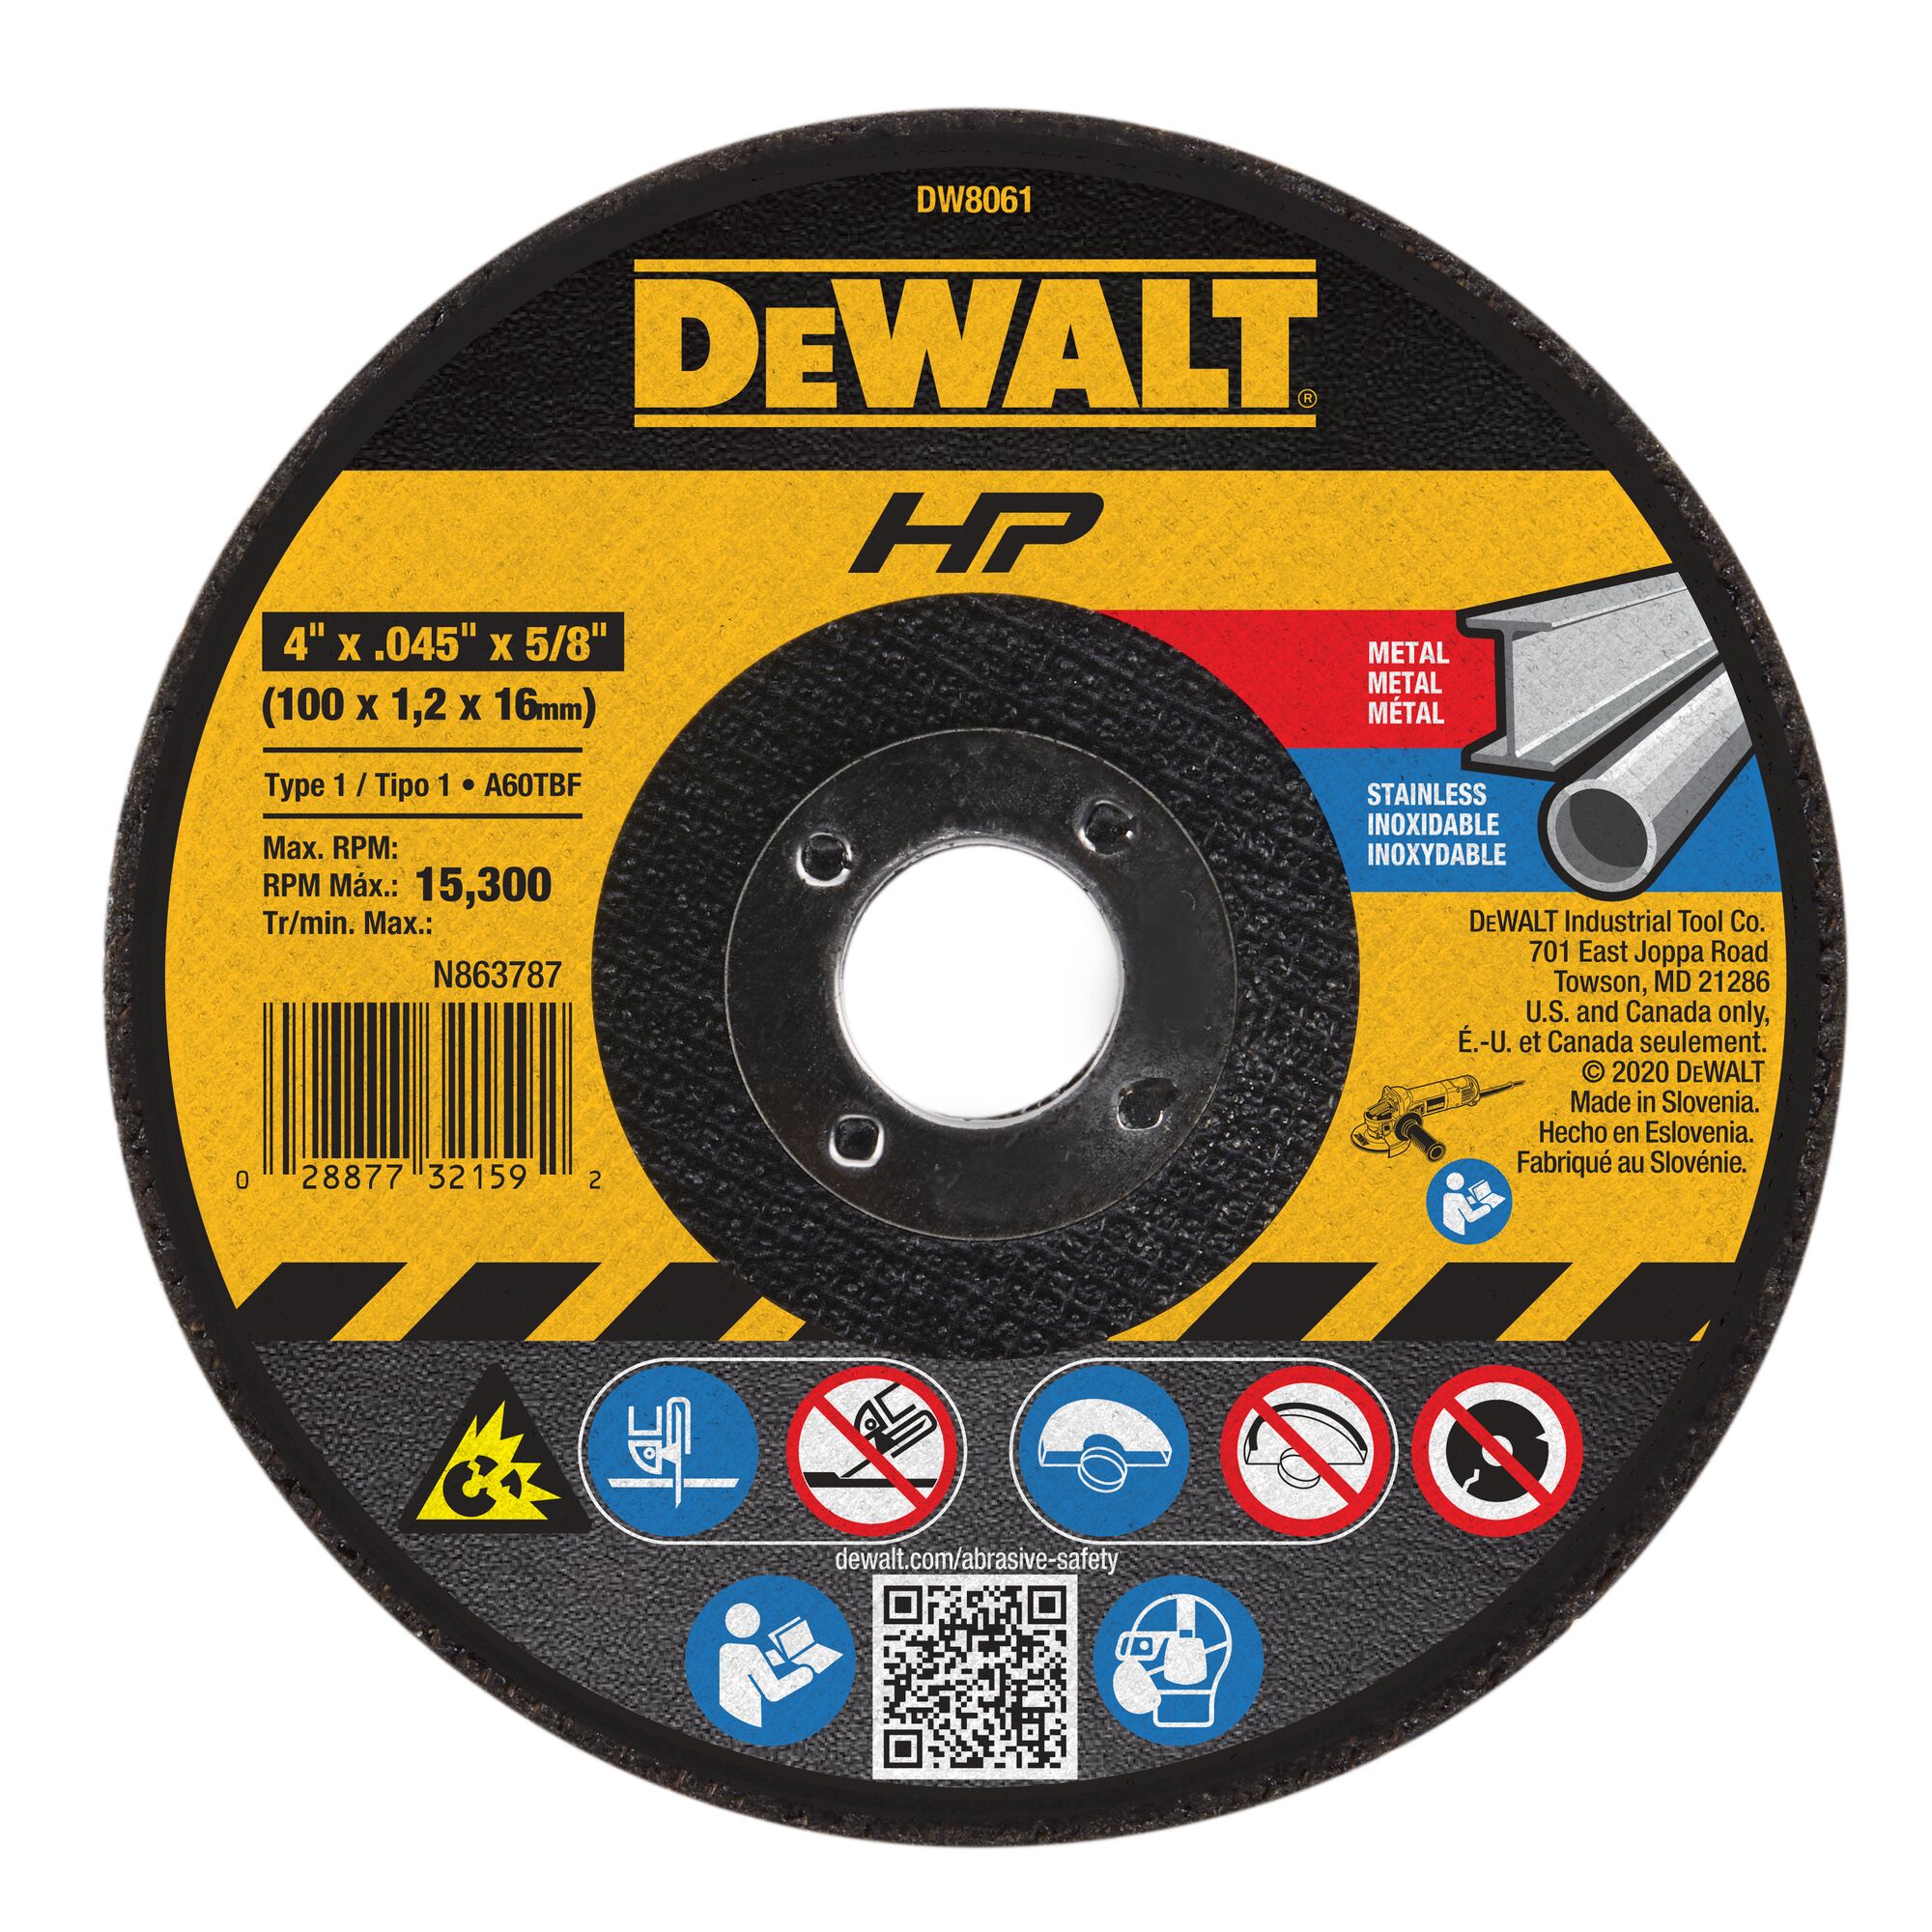 5-Count 4" Dewalt Aluminum Oxide Grinding Wheel $3.37 + Free Store Pickup at Lowes